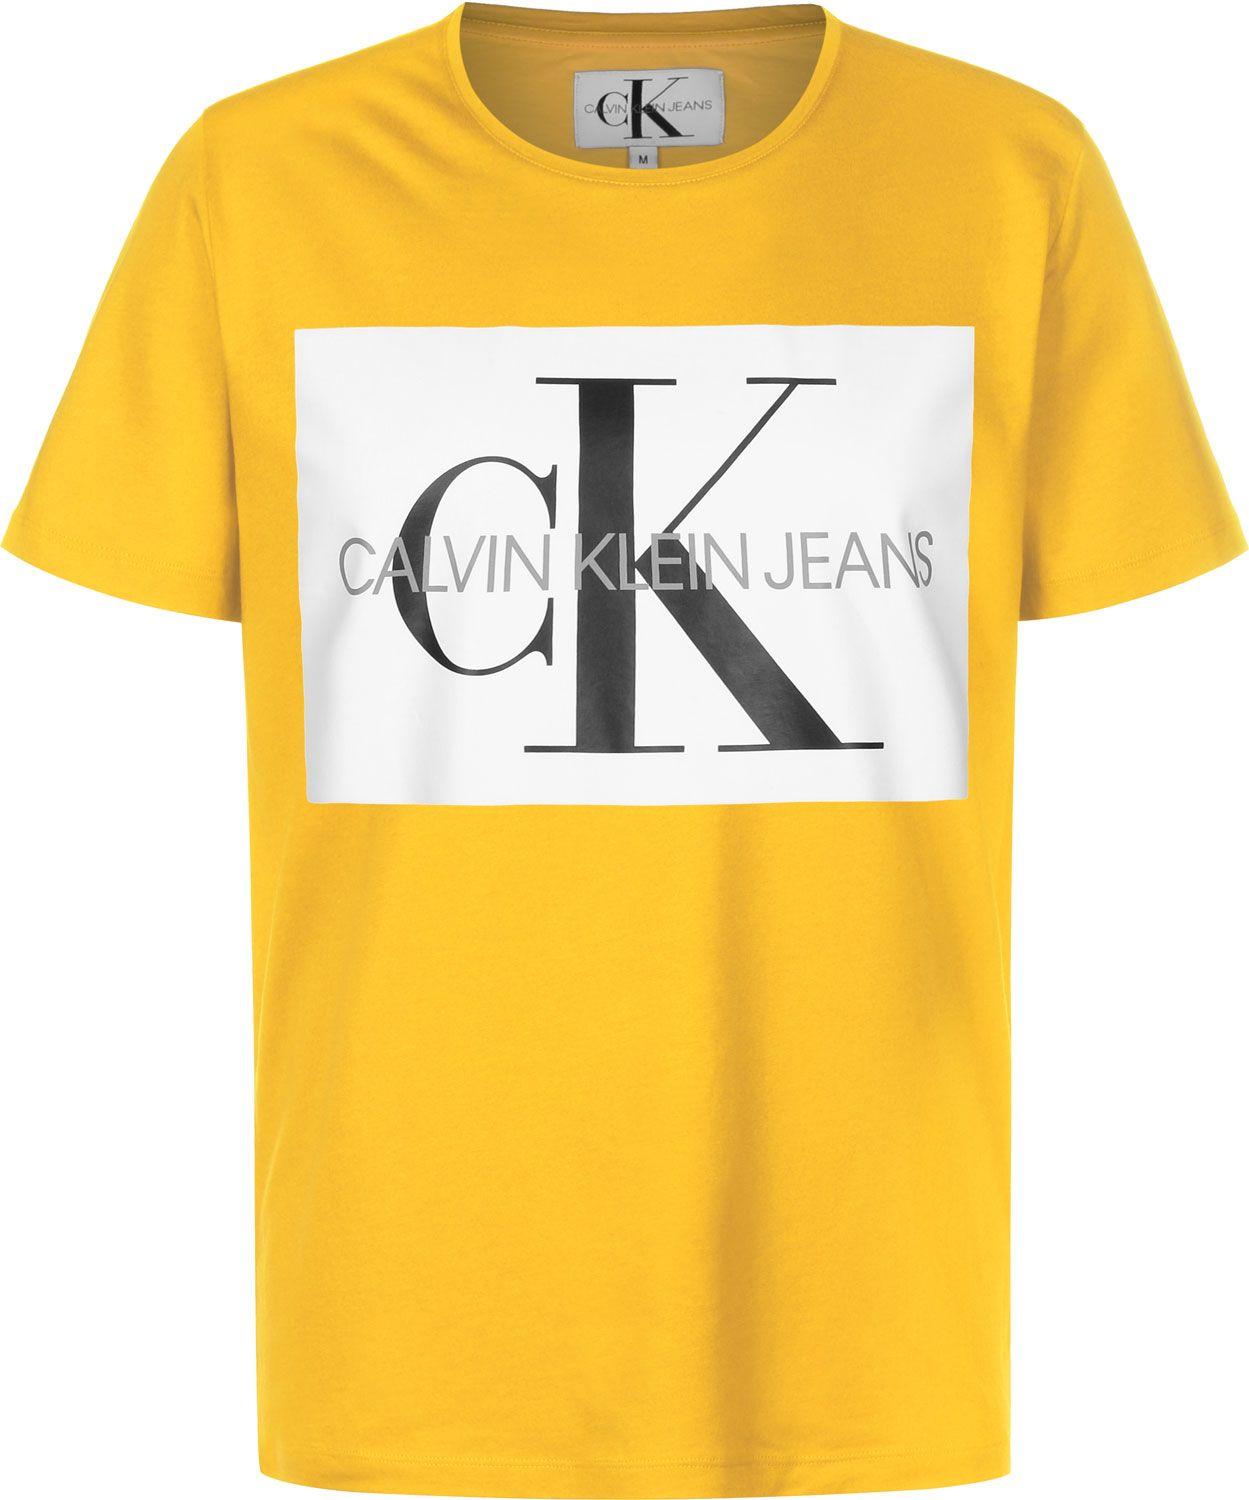 Red and Yellow Box Logo - Calvin Klein Jeans Monogram Box Logo T-shirt yellow | WeAre Shop